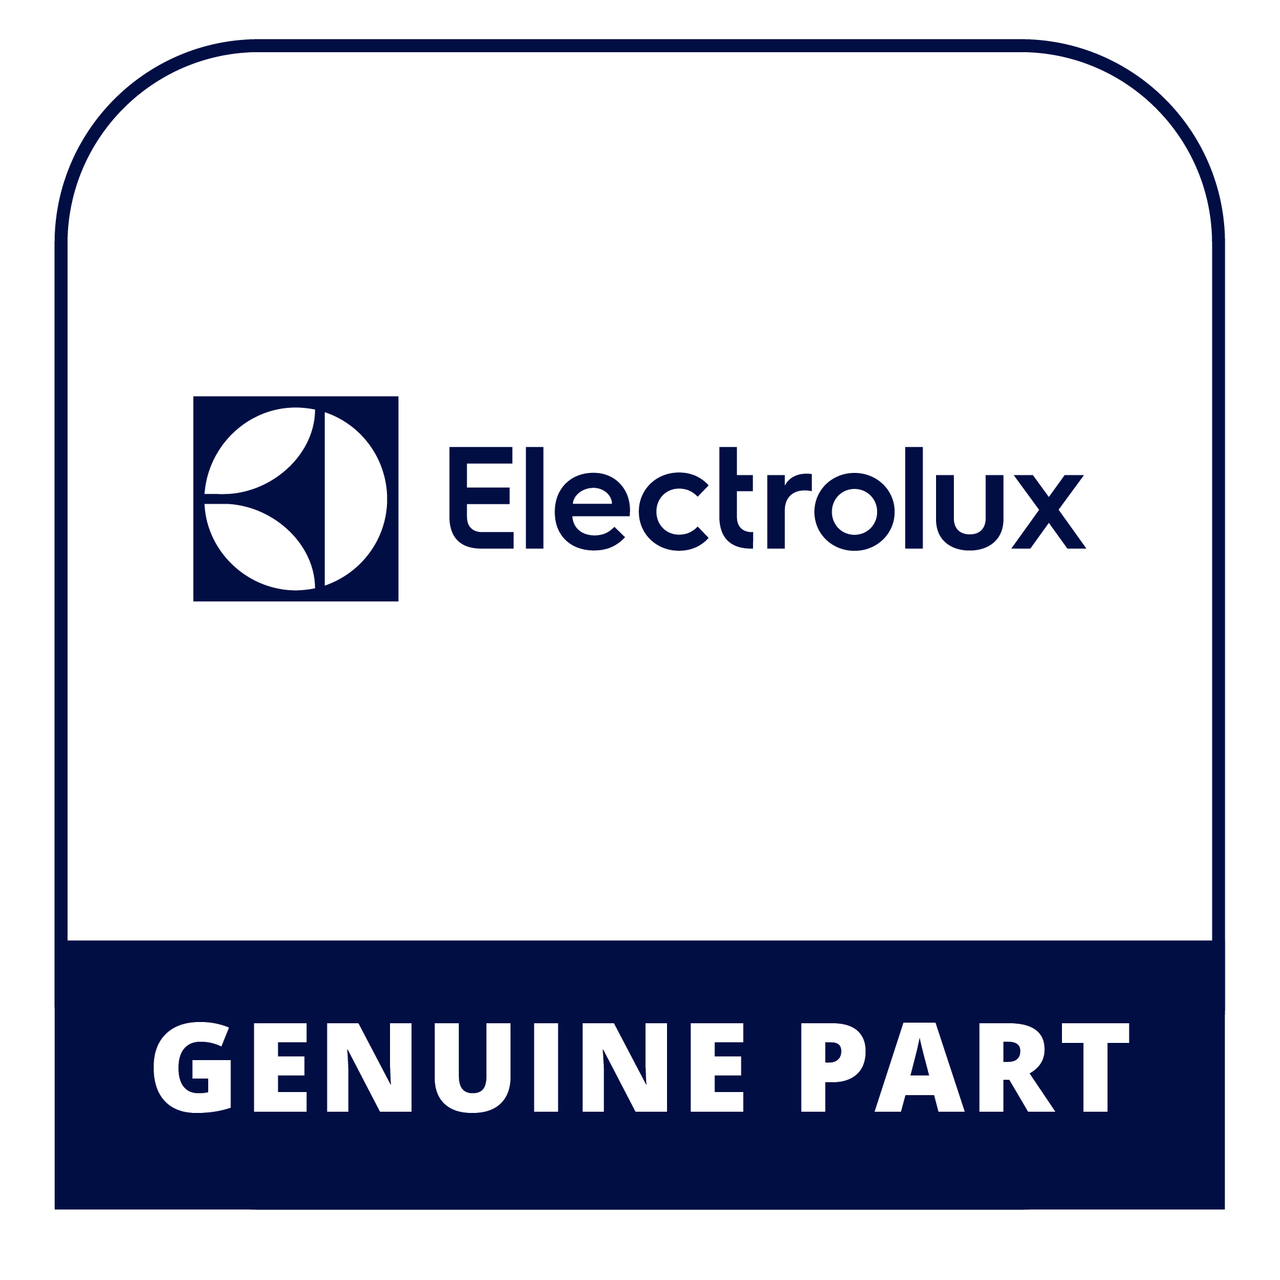 Frigidaire - Electrolux 318260056 Panel - Genuine Electrolux Part